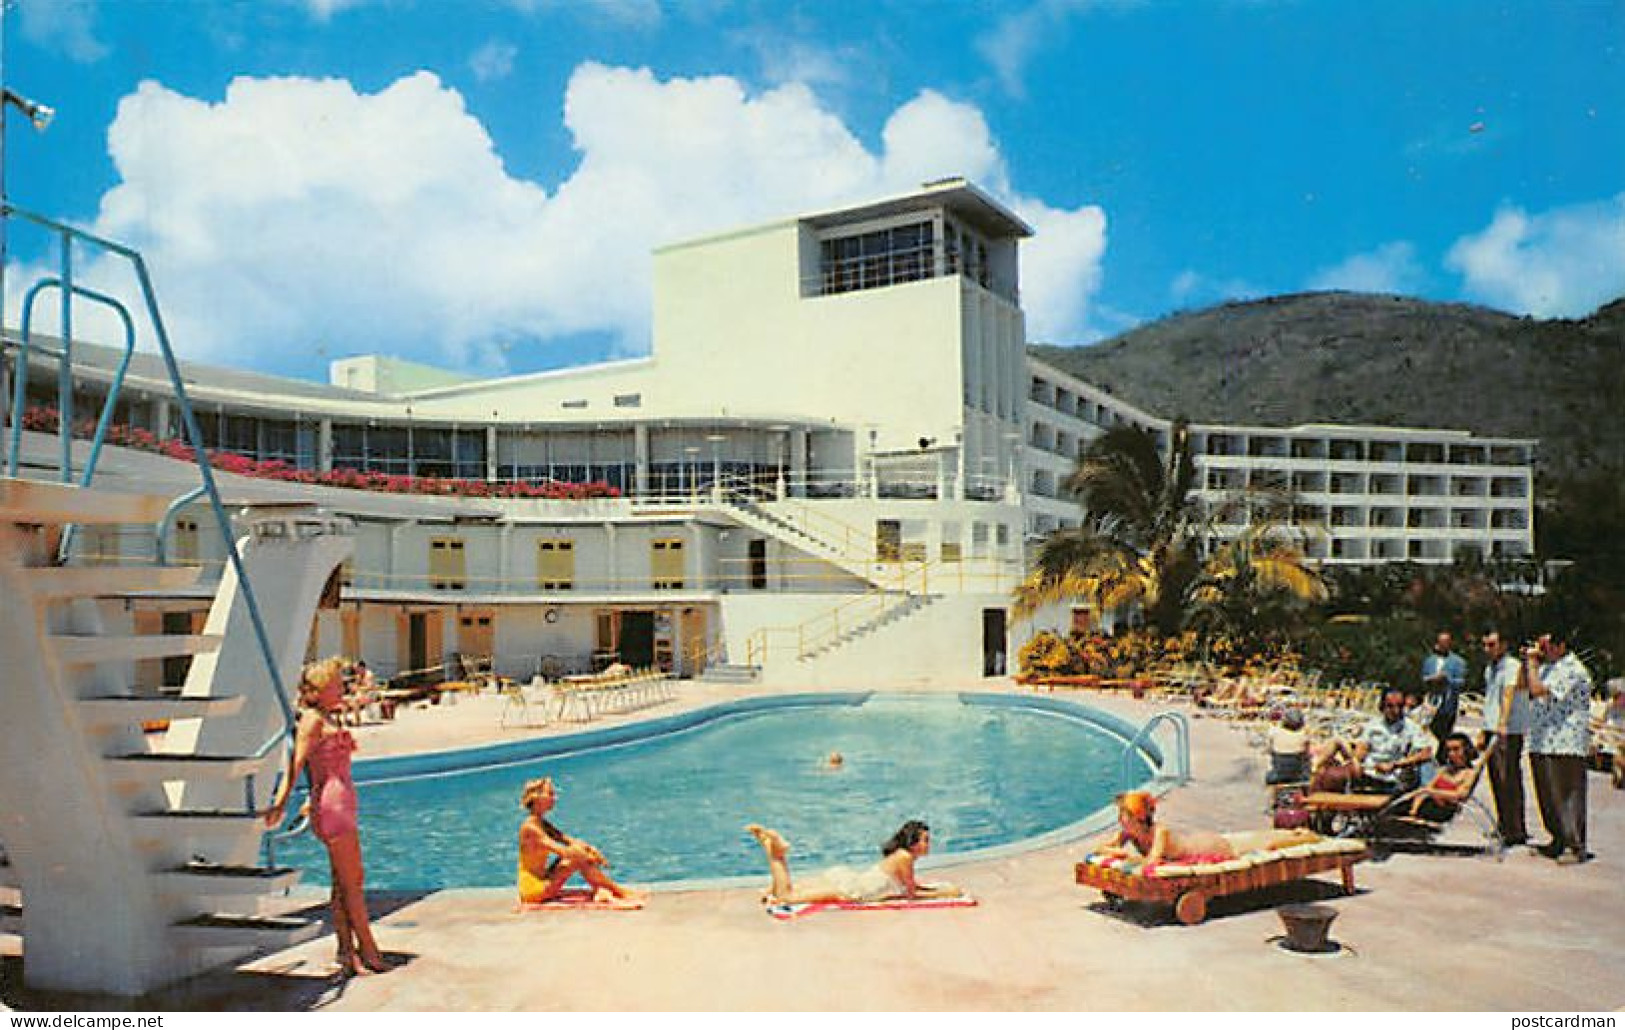 U.S. Virgin Islands - ST. THOMAS - The Virgin Isle Hotel - Publ. Dormand Postcards  - Jungferninseln, Amerik.